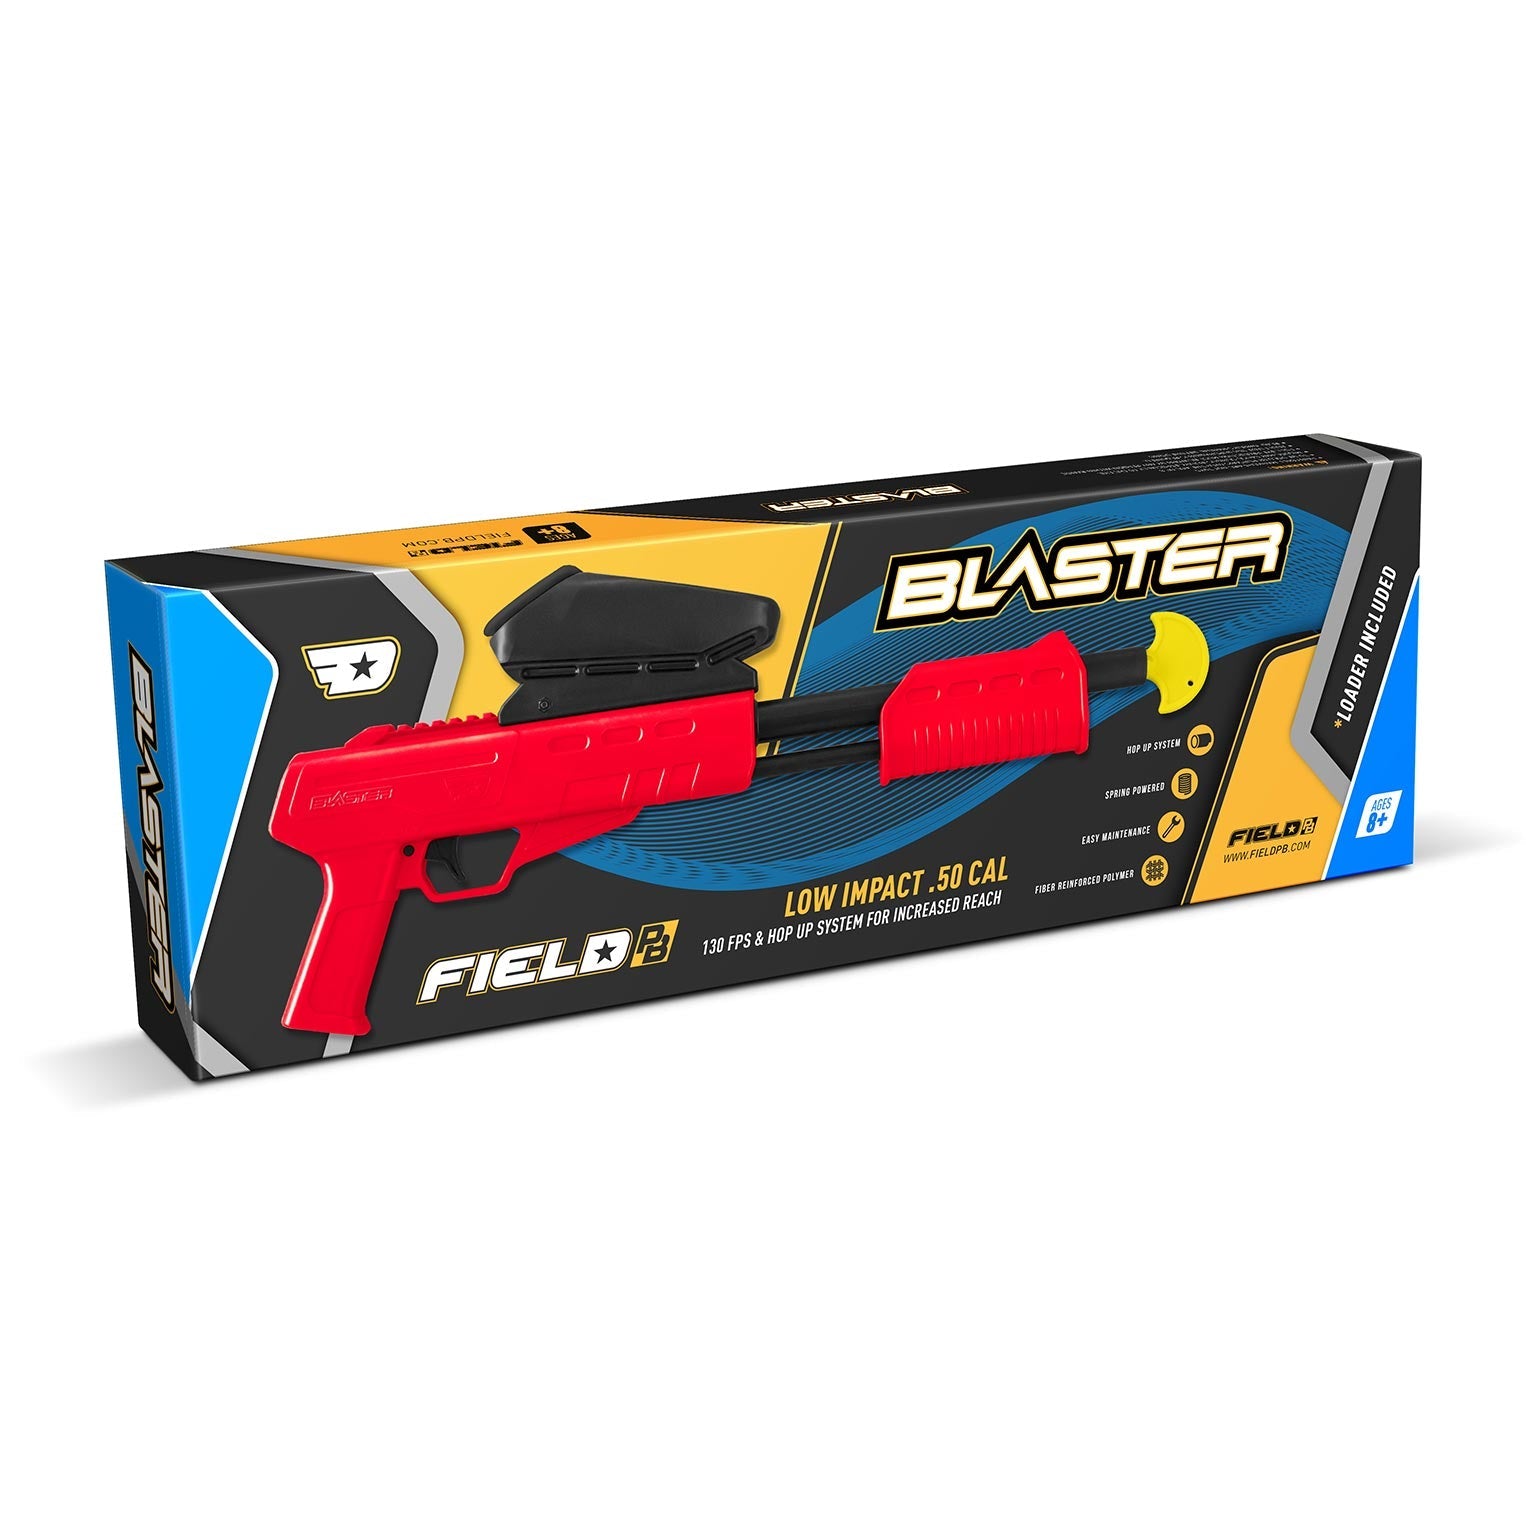 FieldPB .50 Cal Blaster - Ex Dispay